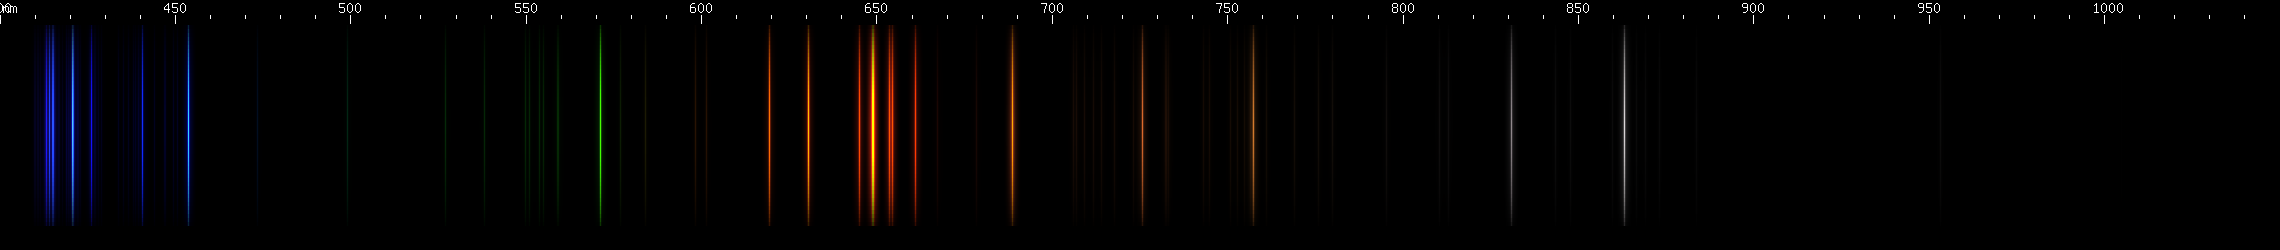 Spectral lines of Plutonium.